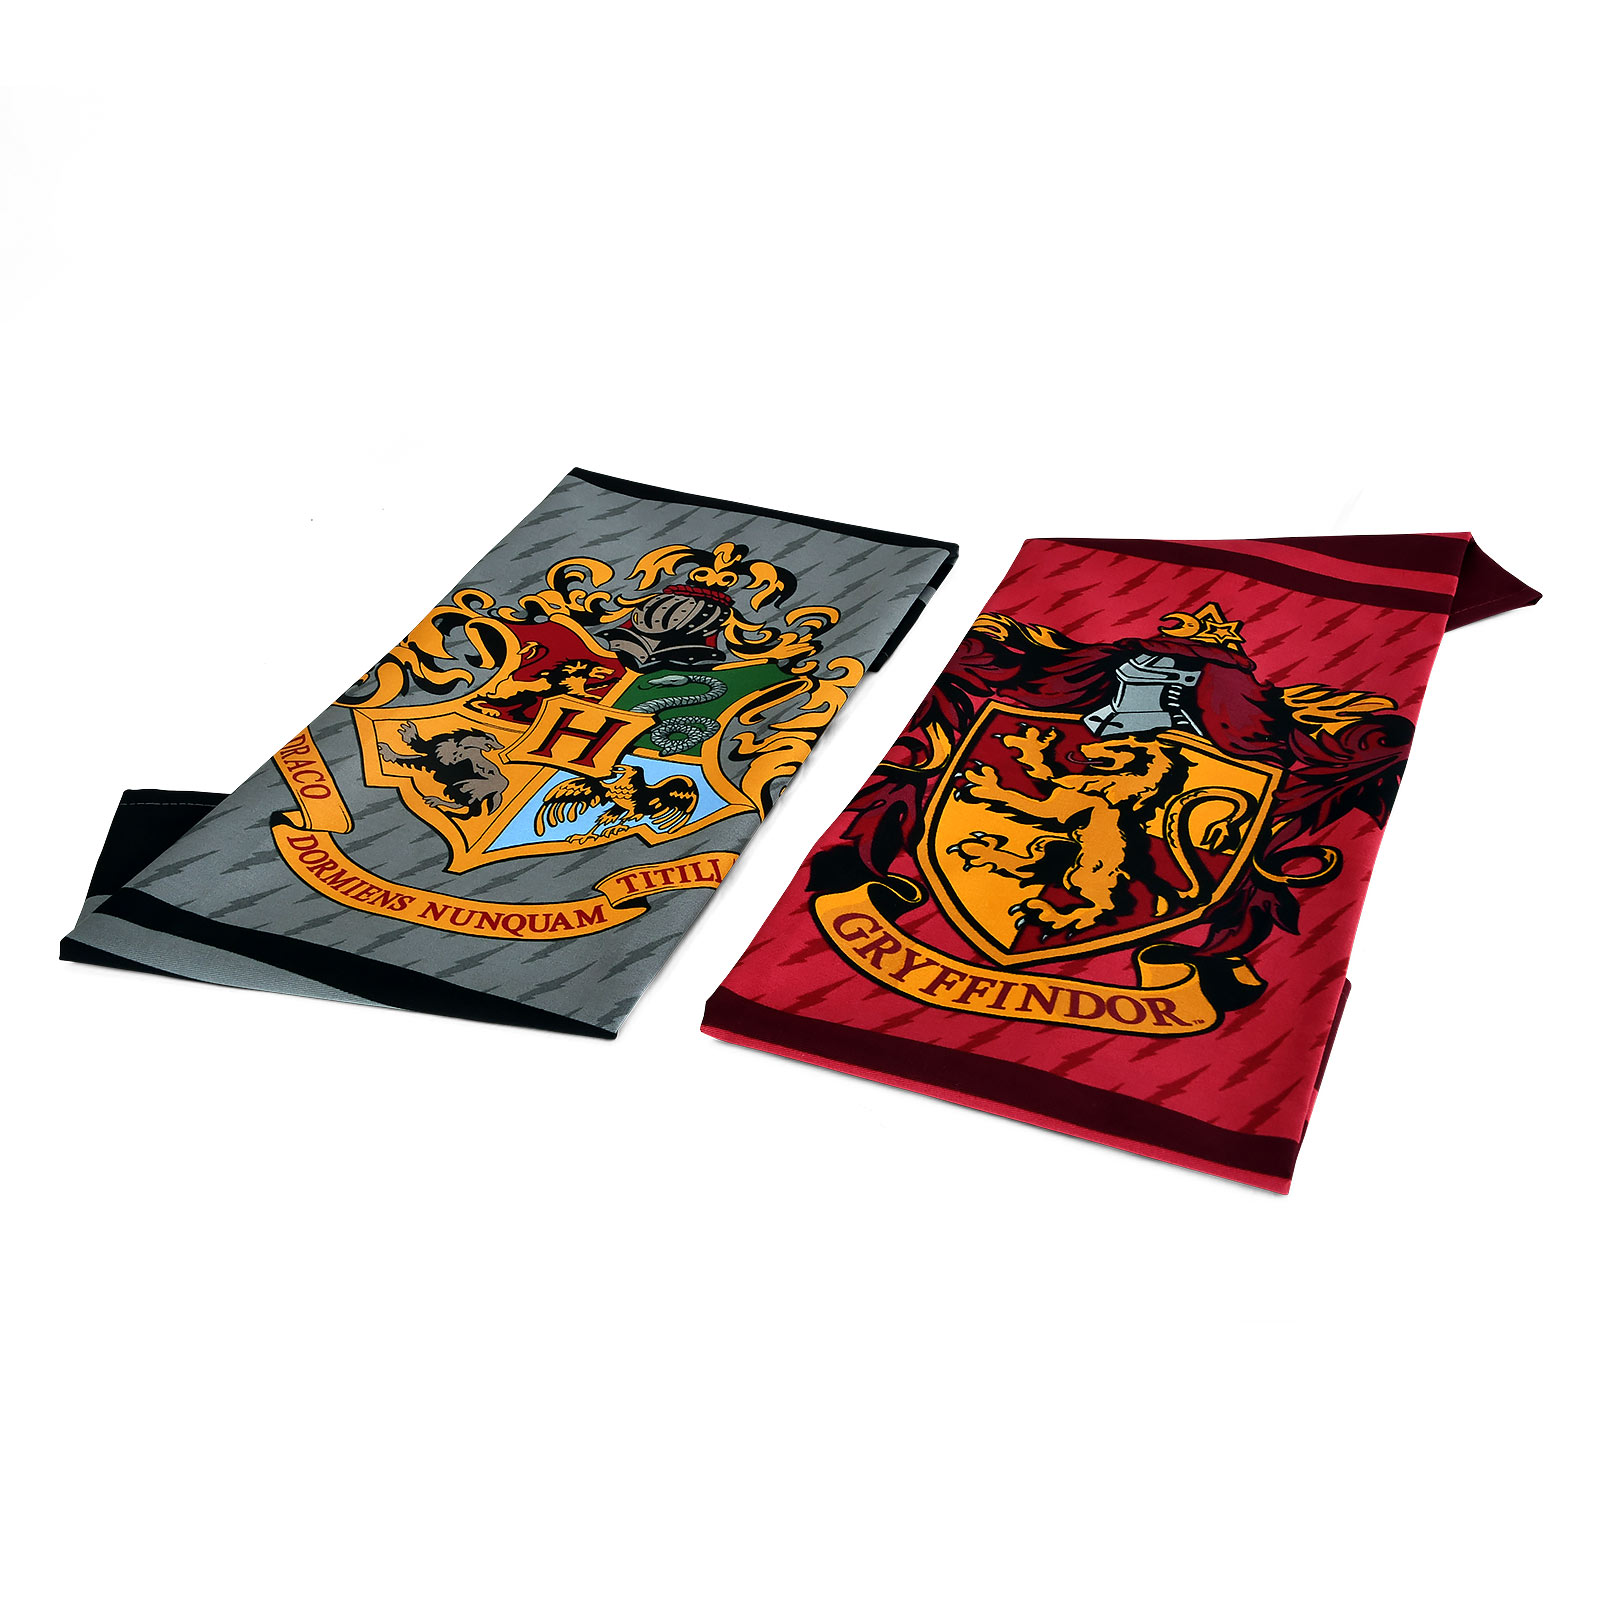 Harry Potter - Gryffindor & Hogwarts Geschirrtücher Set